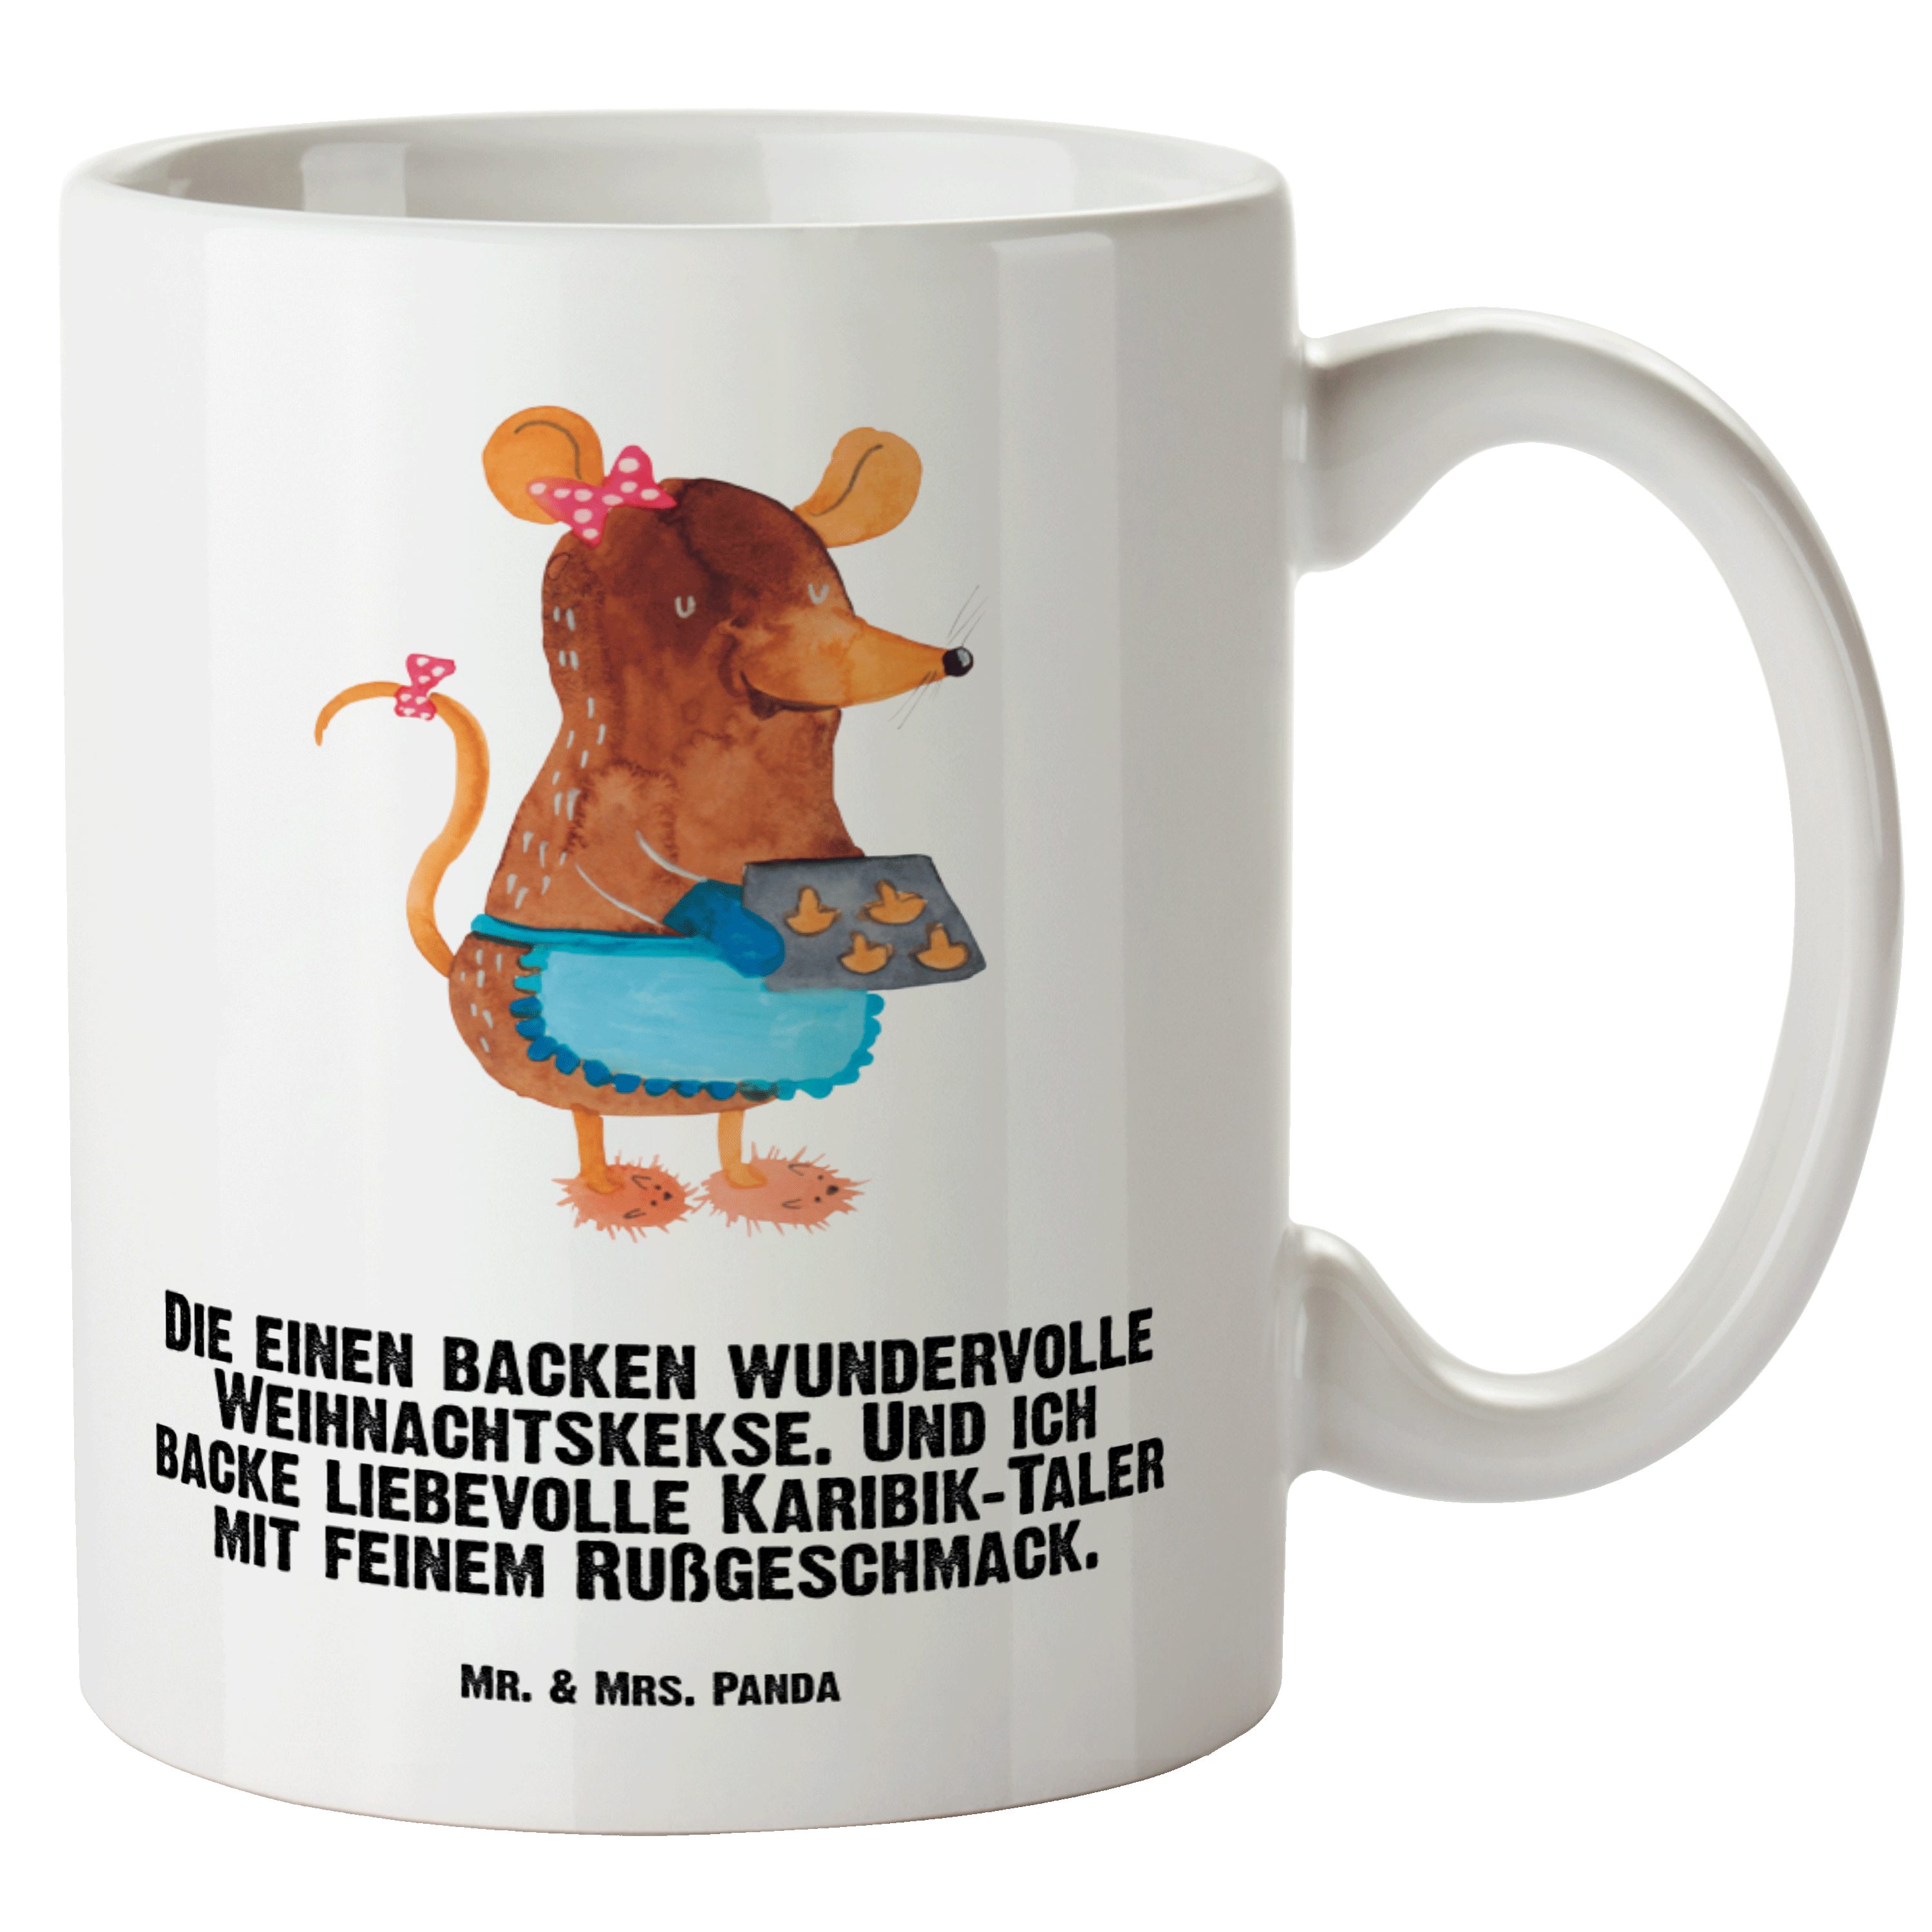 Mr. & Mrs. Panda Tasse Maus Kekse - Weiß - Geschenk, Jumbo Tasse, Große Tasse, Grosse Kaffee, XL Tasse Keramik